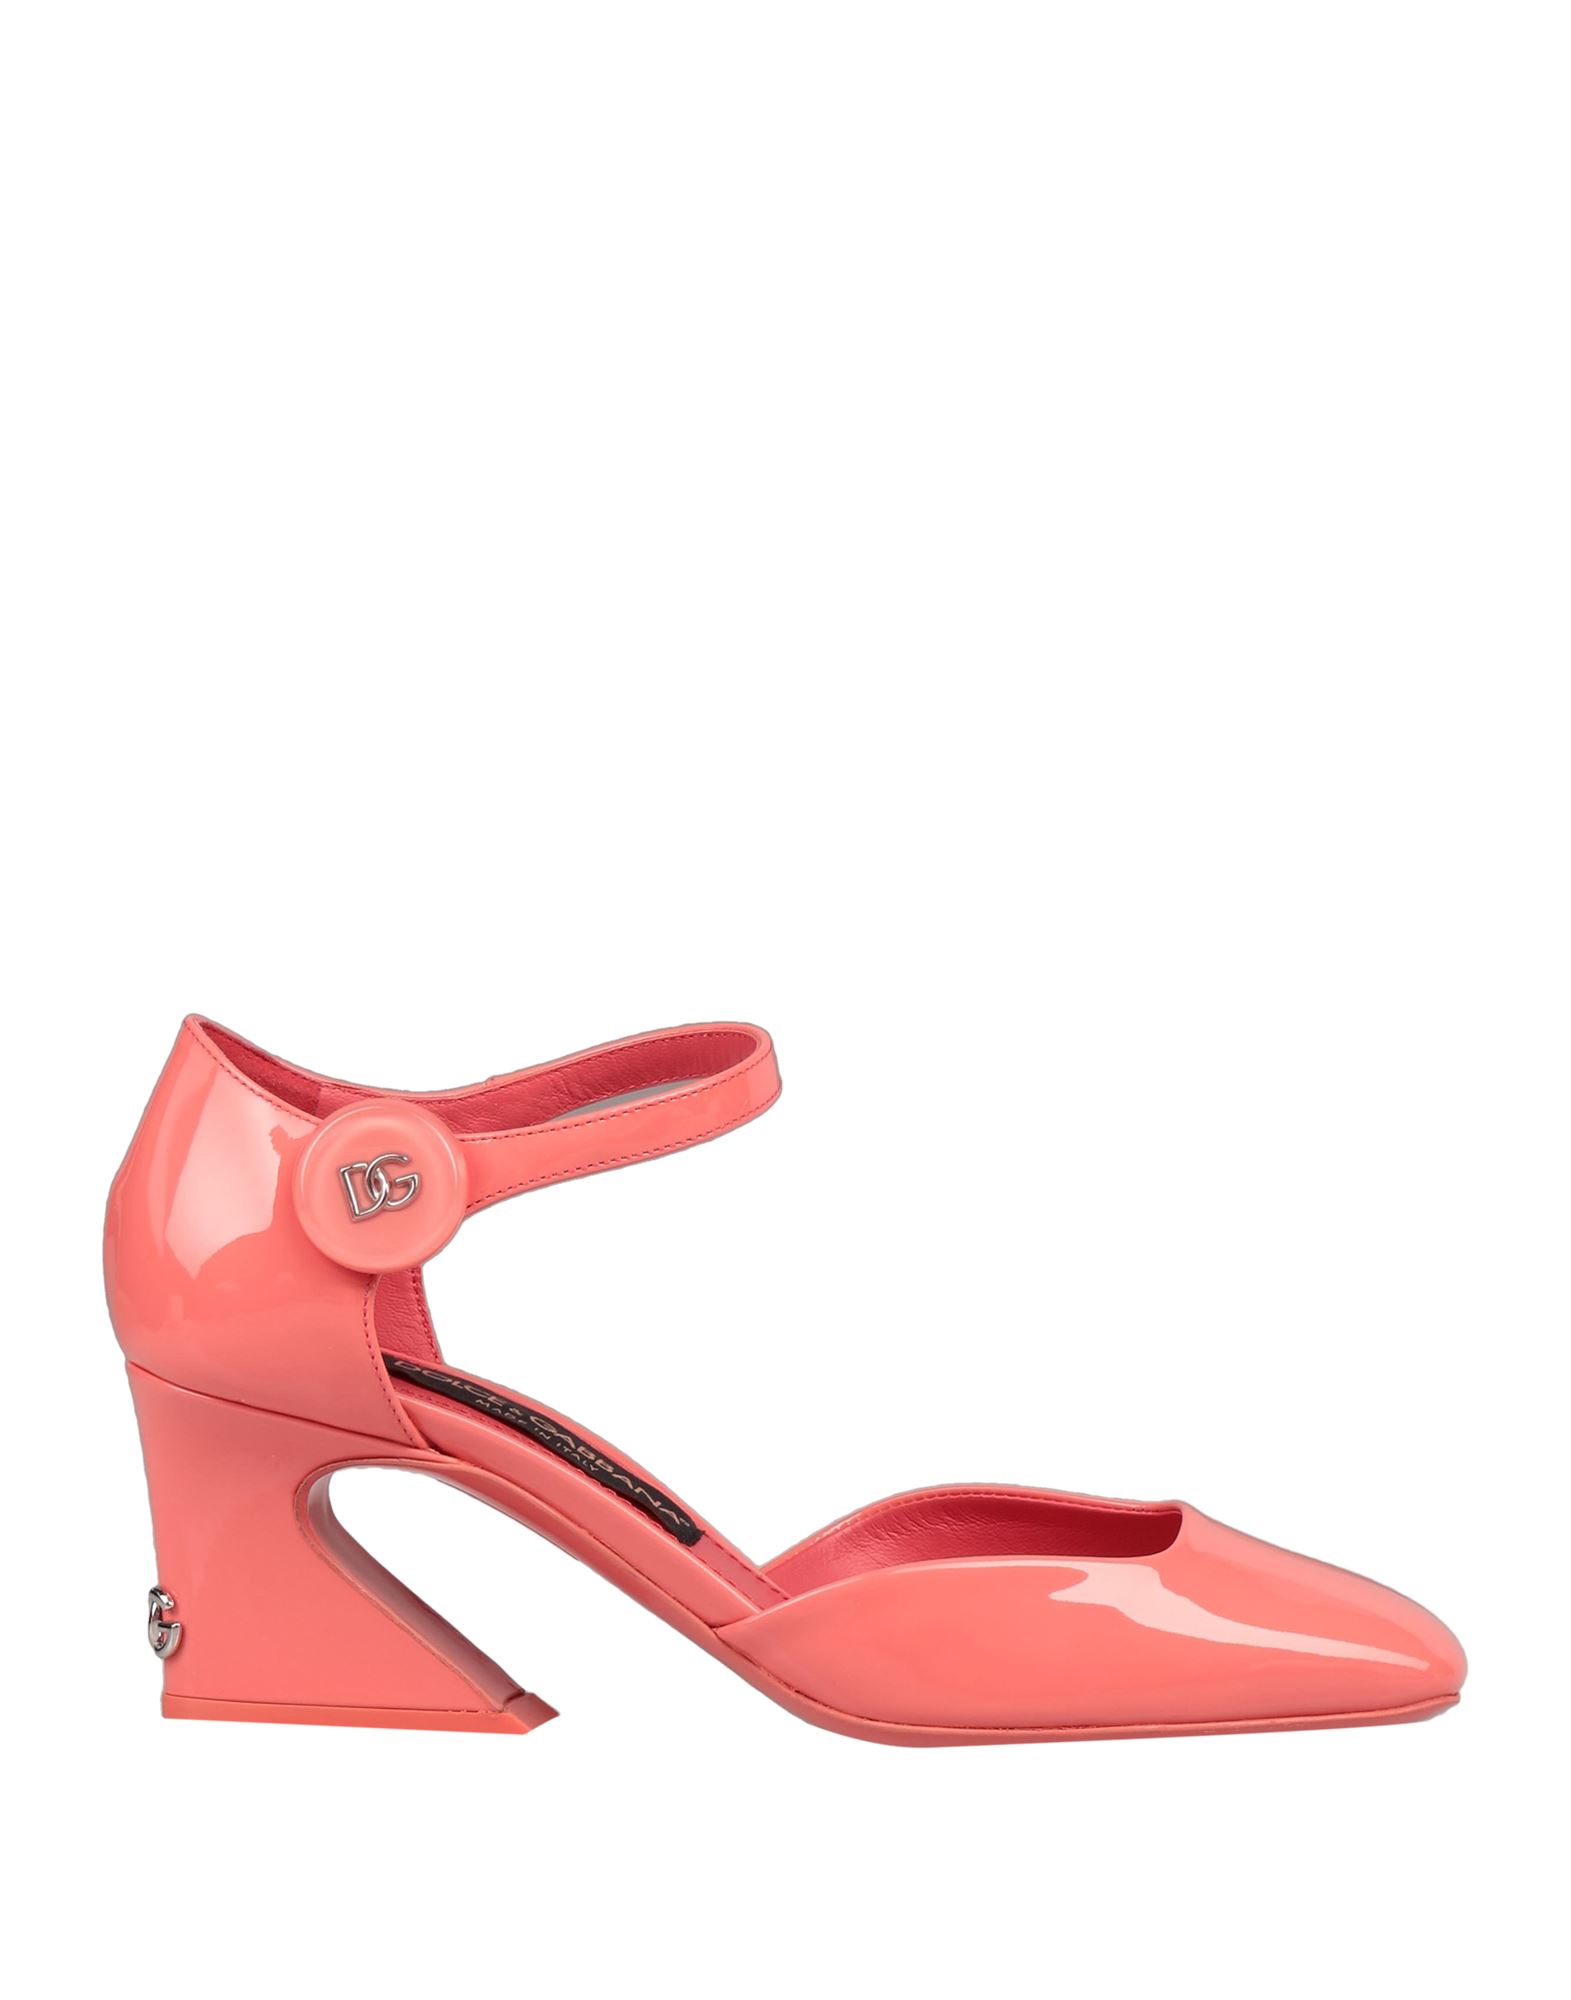 Dolce & Gabbana Pumps In Salmon Pink